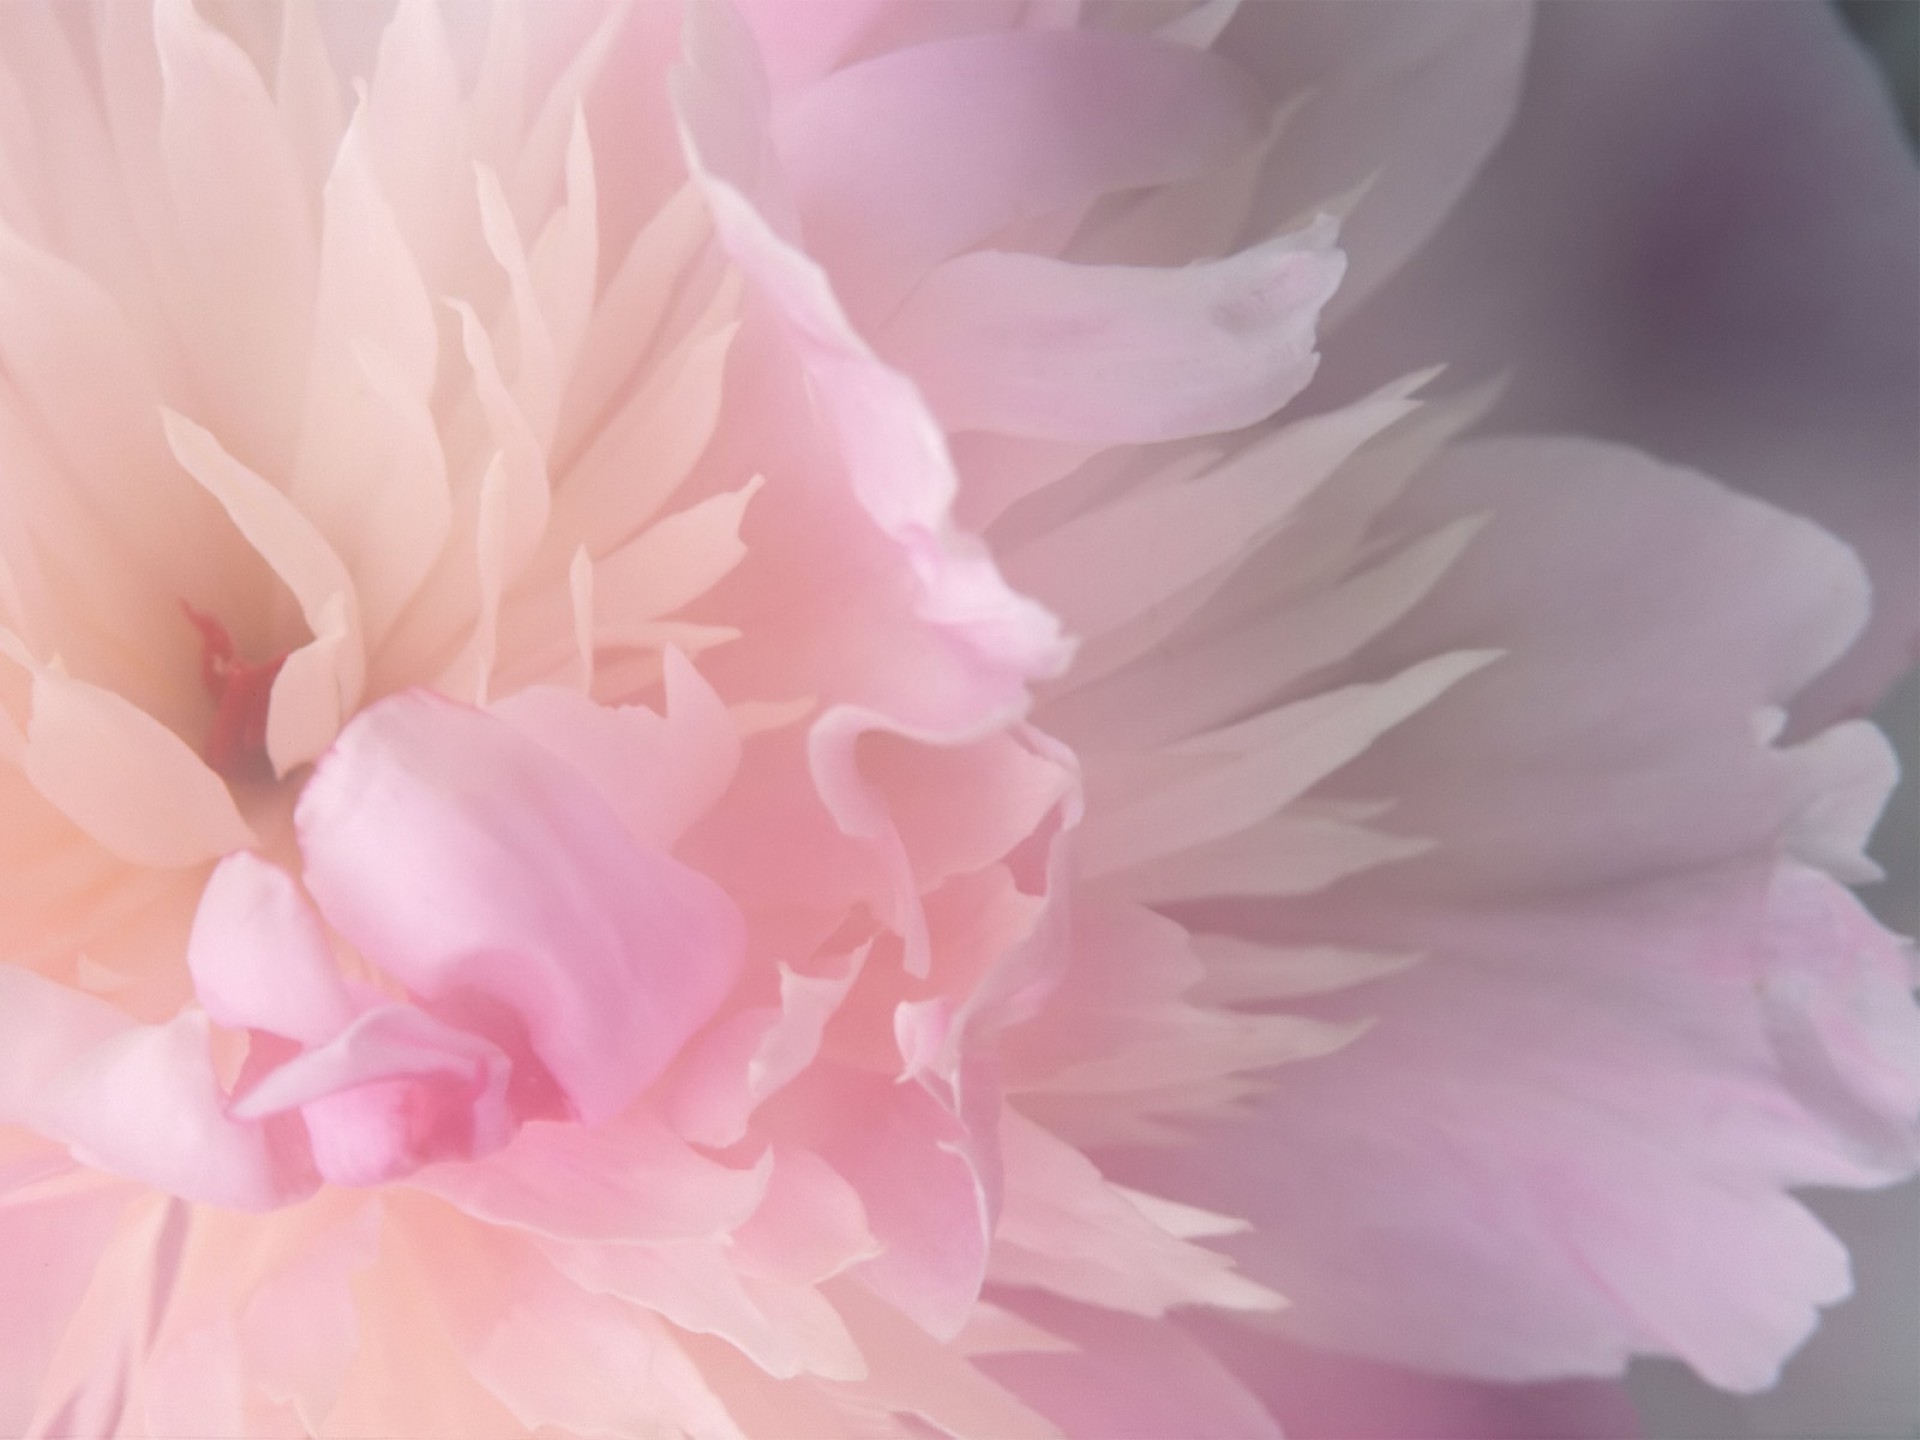 desktop Images paints, abstract, flower, light, petals, lines, light coloured